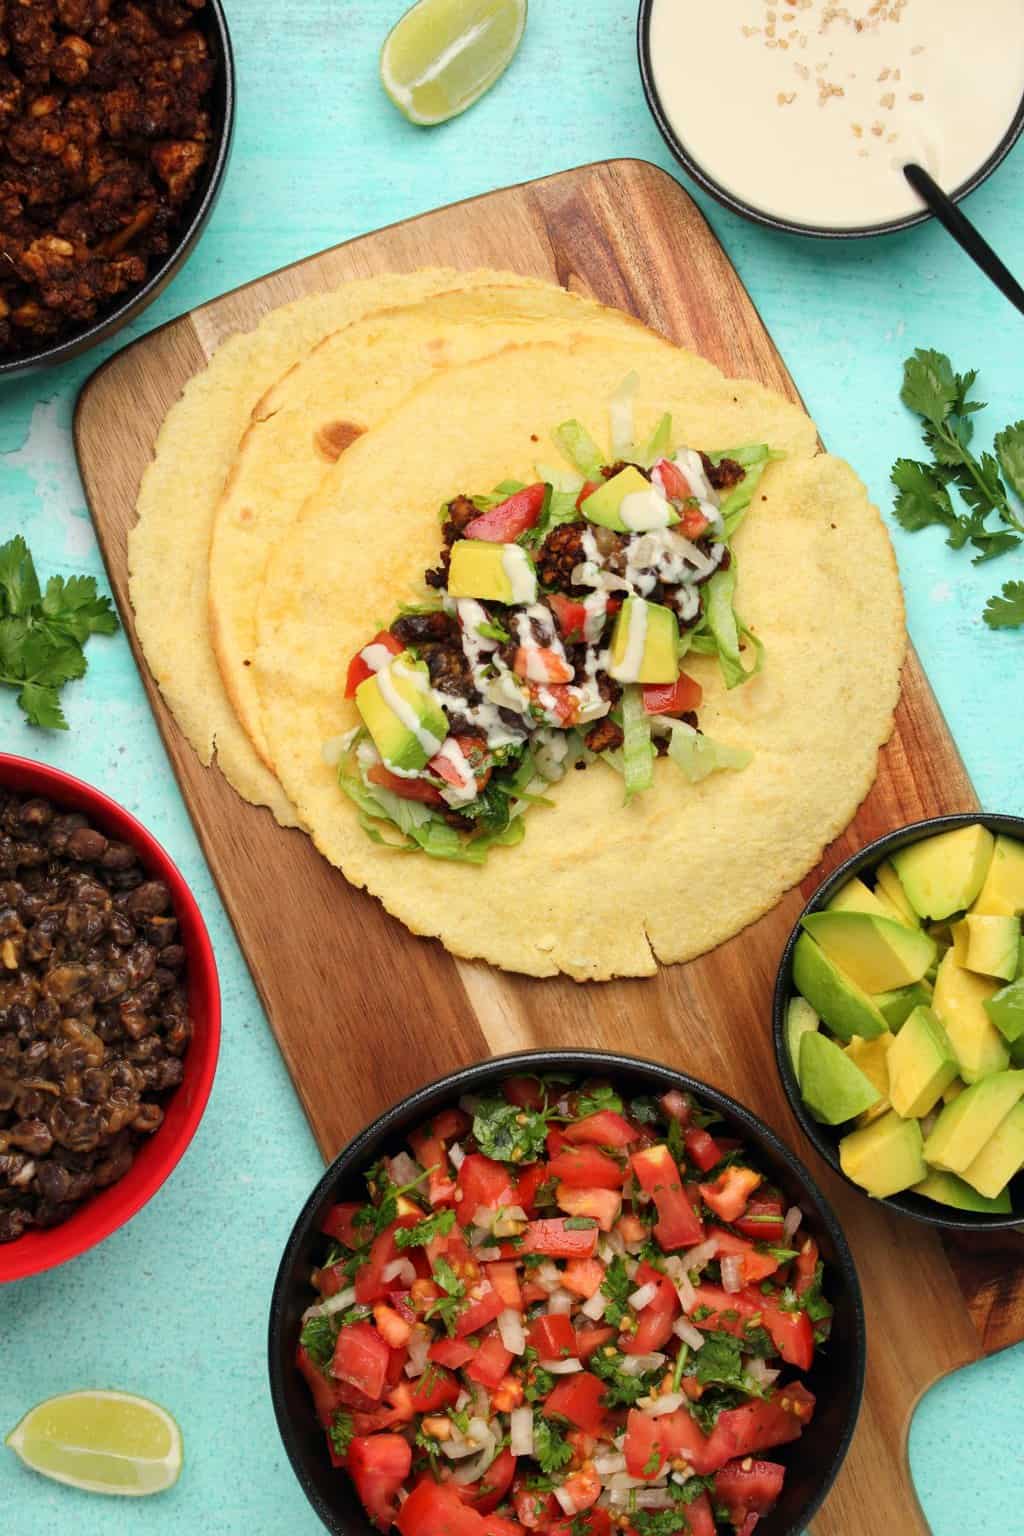 Assembling a vegan taco with lettuce, vegan taco meat, pico de gallo, avocado and tahini sauce. 